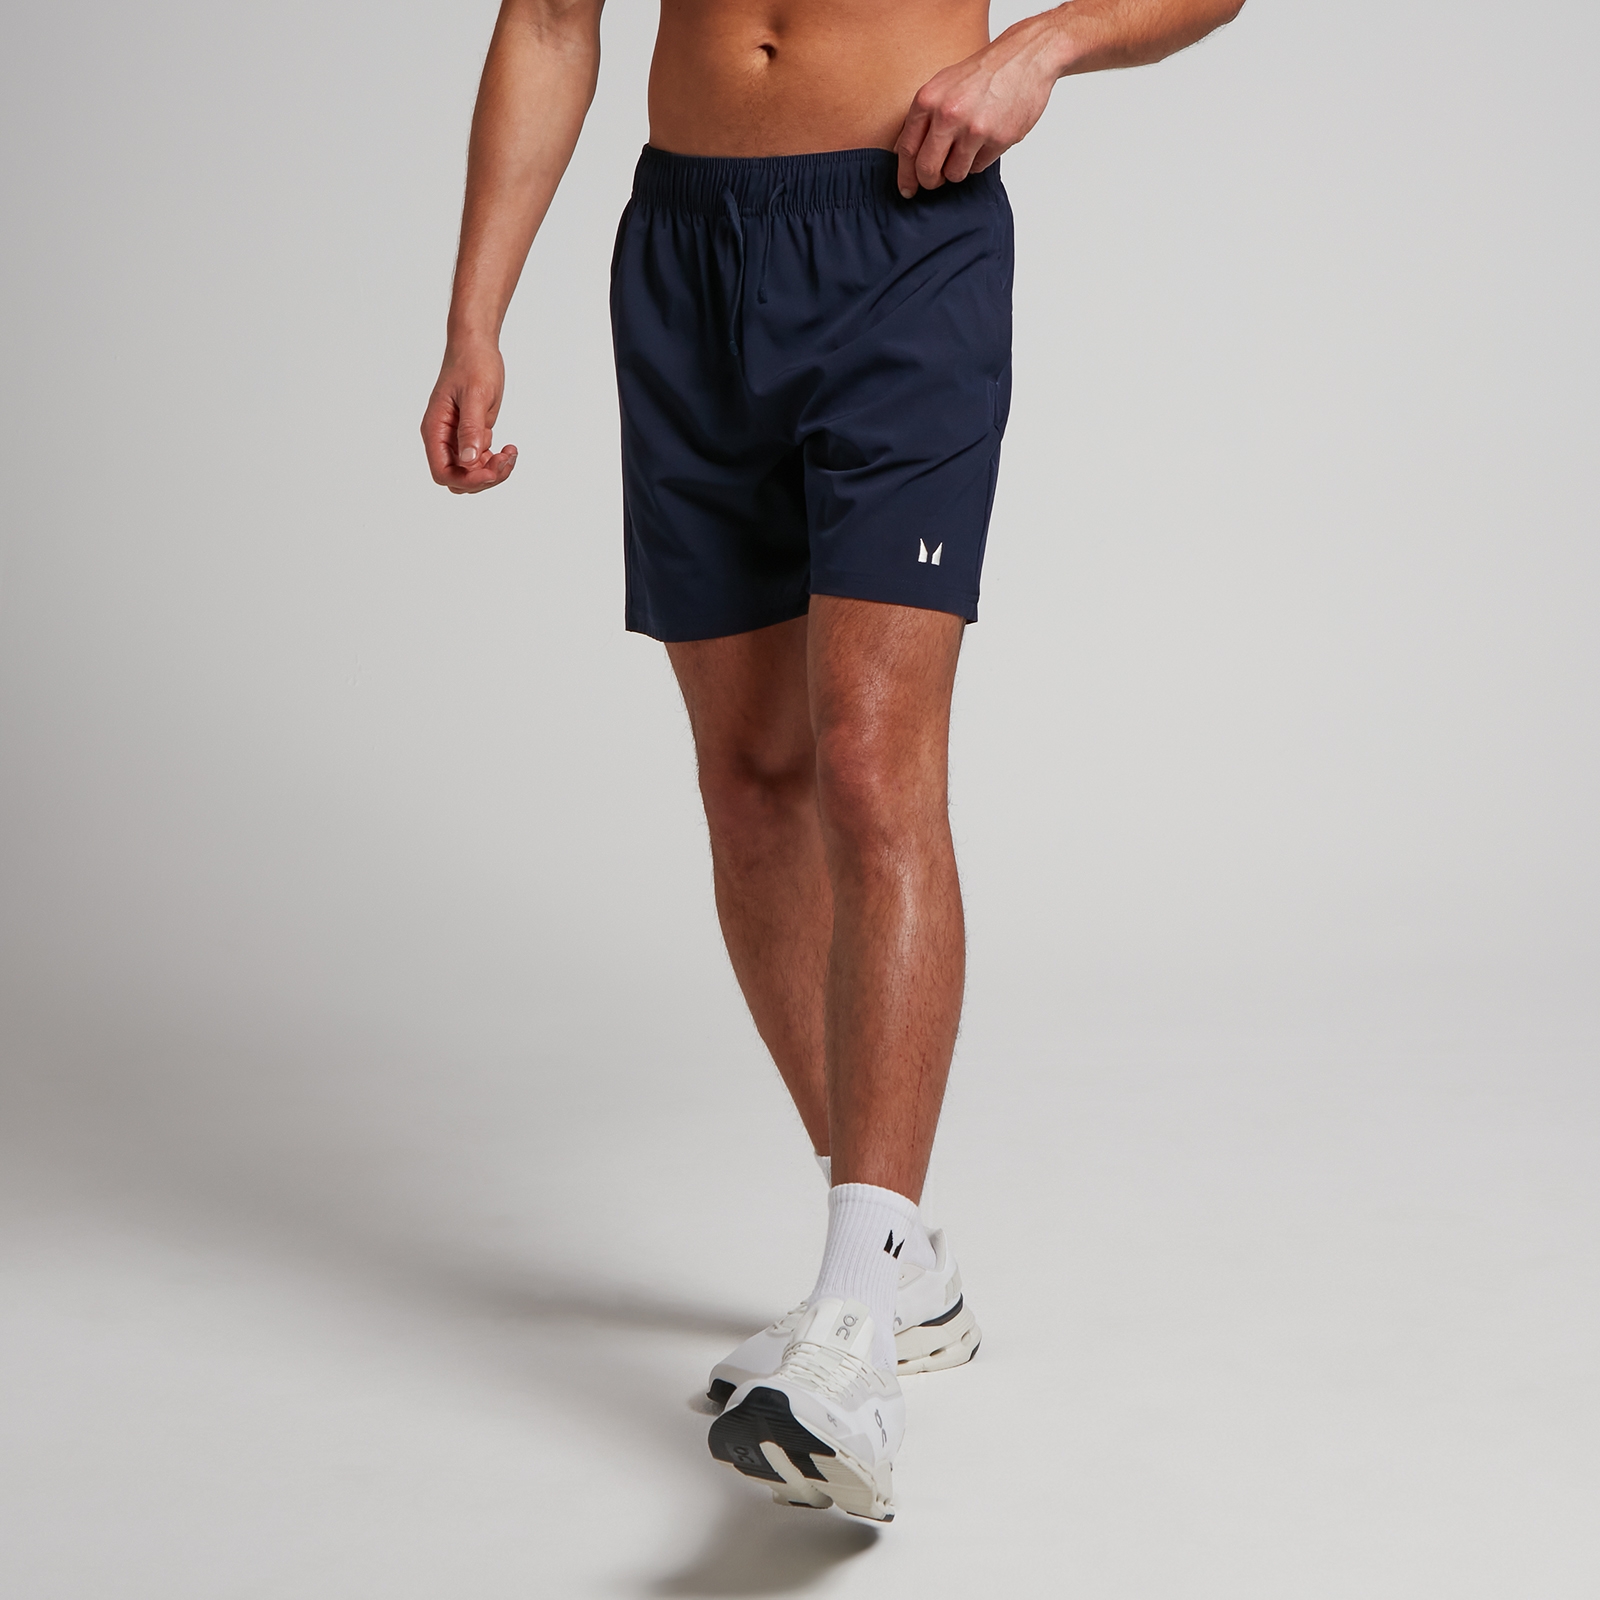 Image of Pantaloncini sportivi in tessuto MP da uomo - Blu navy - XL